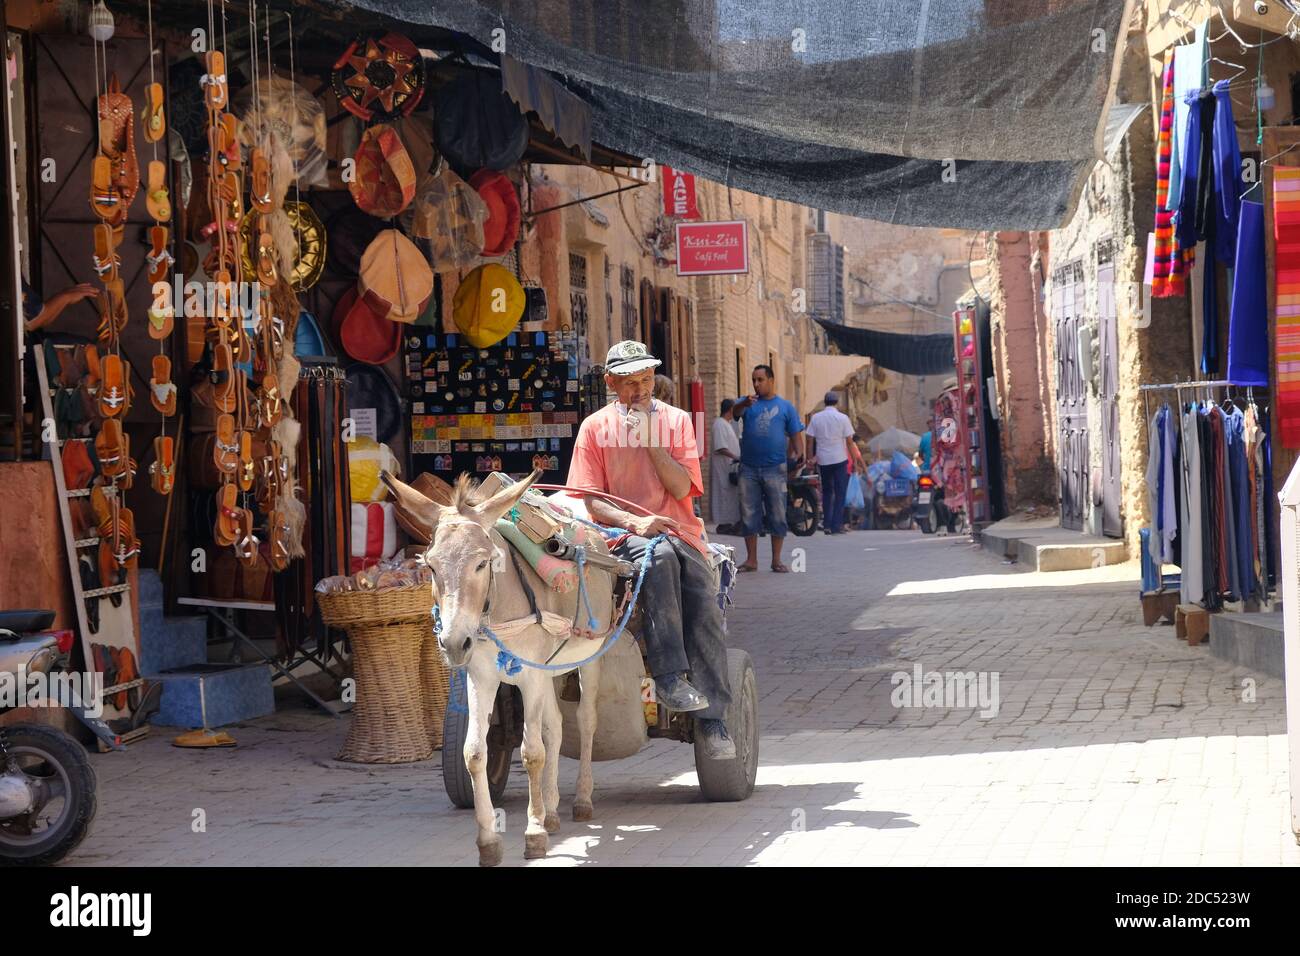 Morocco Marrakesh  - Daily life in Medina Red city with narrow trading streets Stock Photo